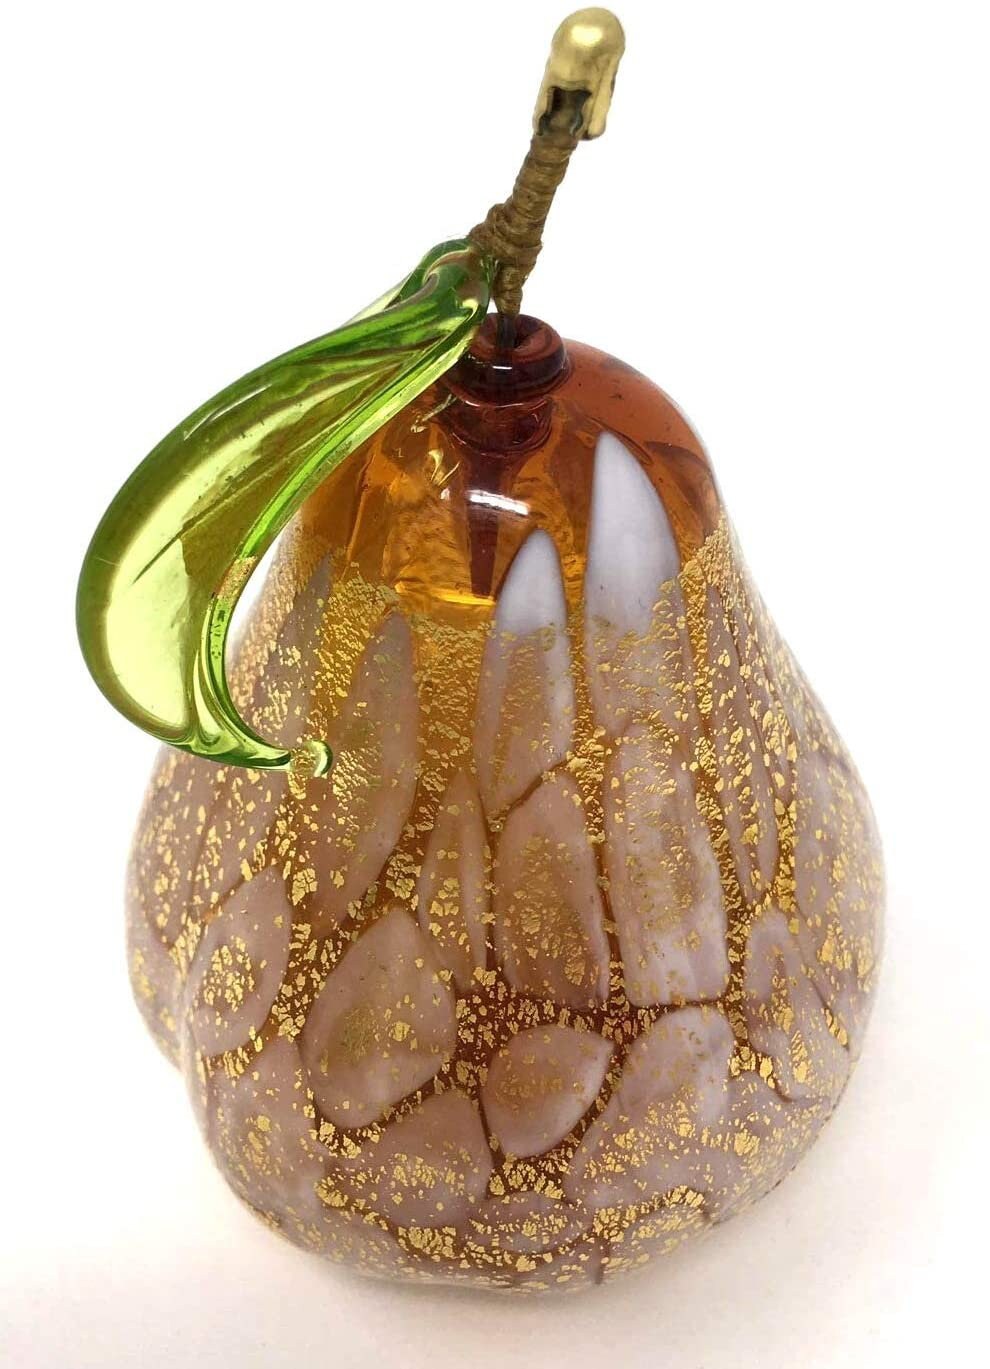 Murano Glass Hand Blown Macchia Pear with Gold Foil, Made In Italy, Gift Idea - My Italian Decor